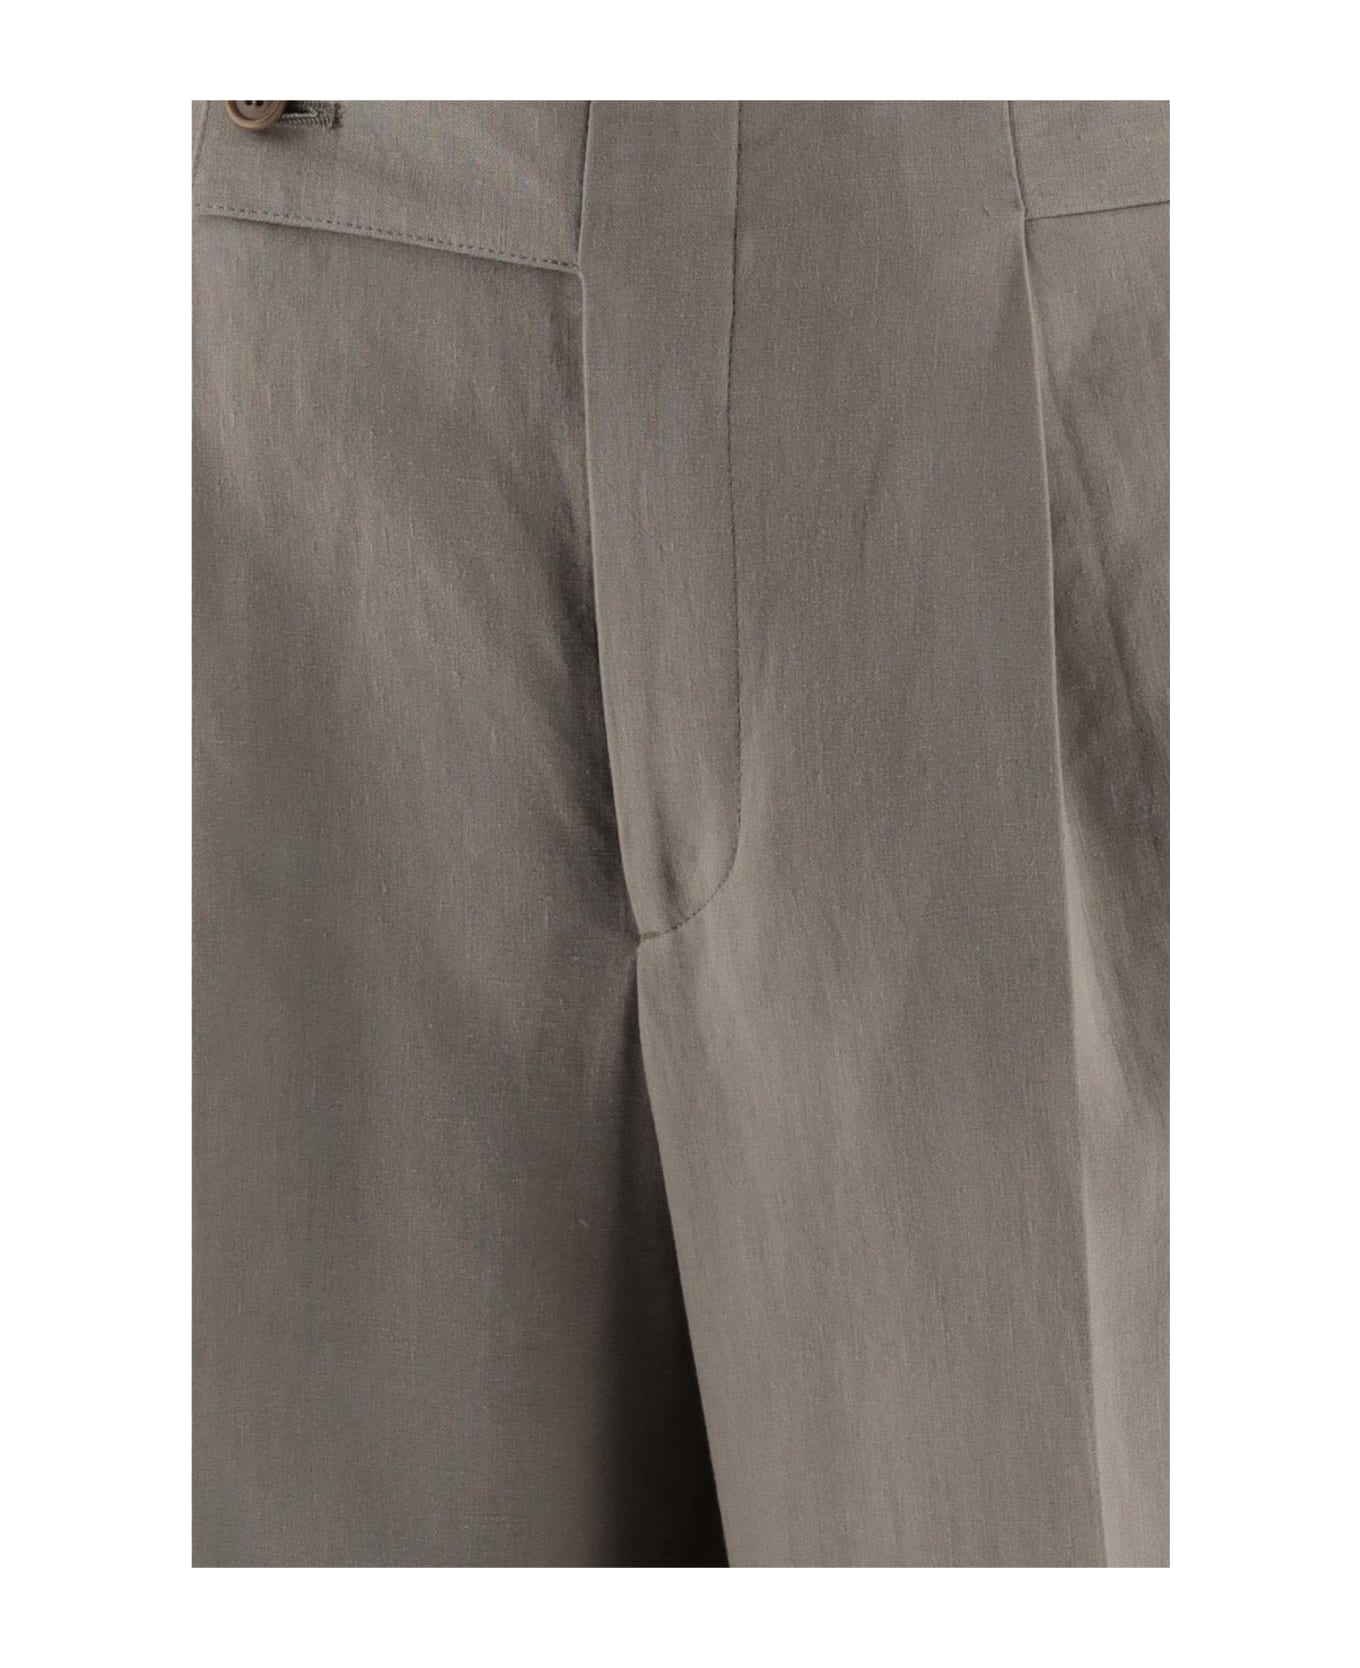 Giorgio Armani Linen Tailored Pants - Beige